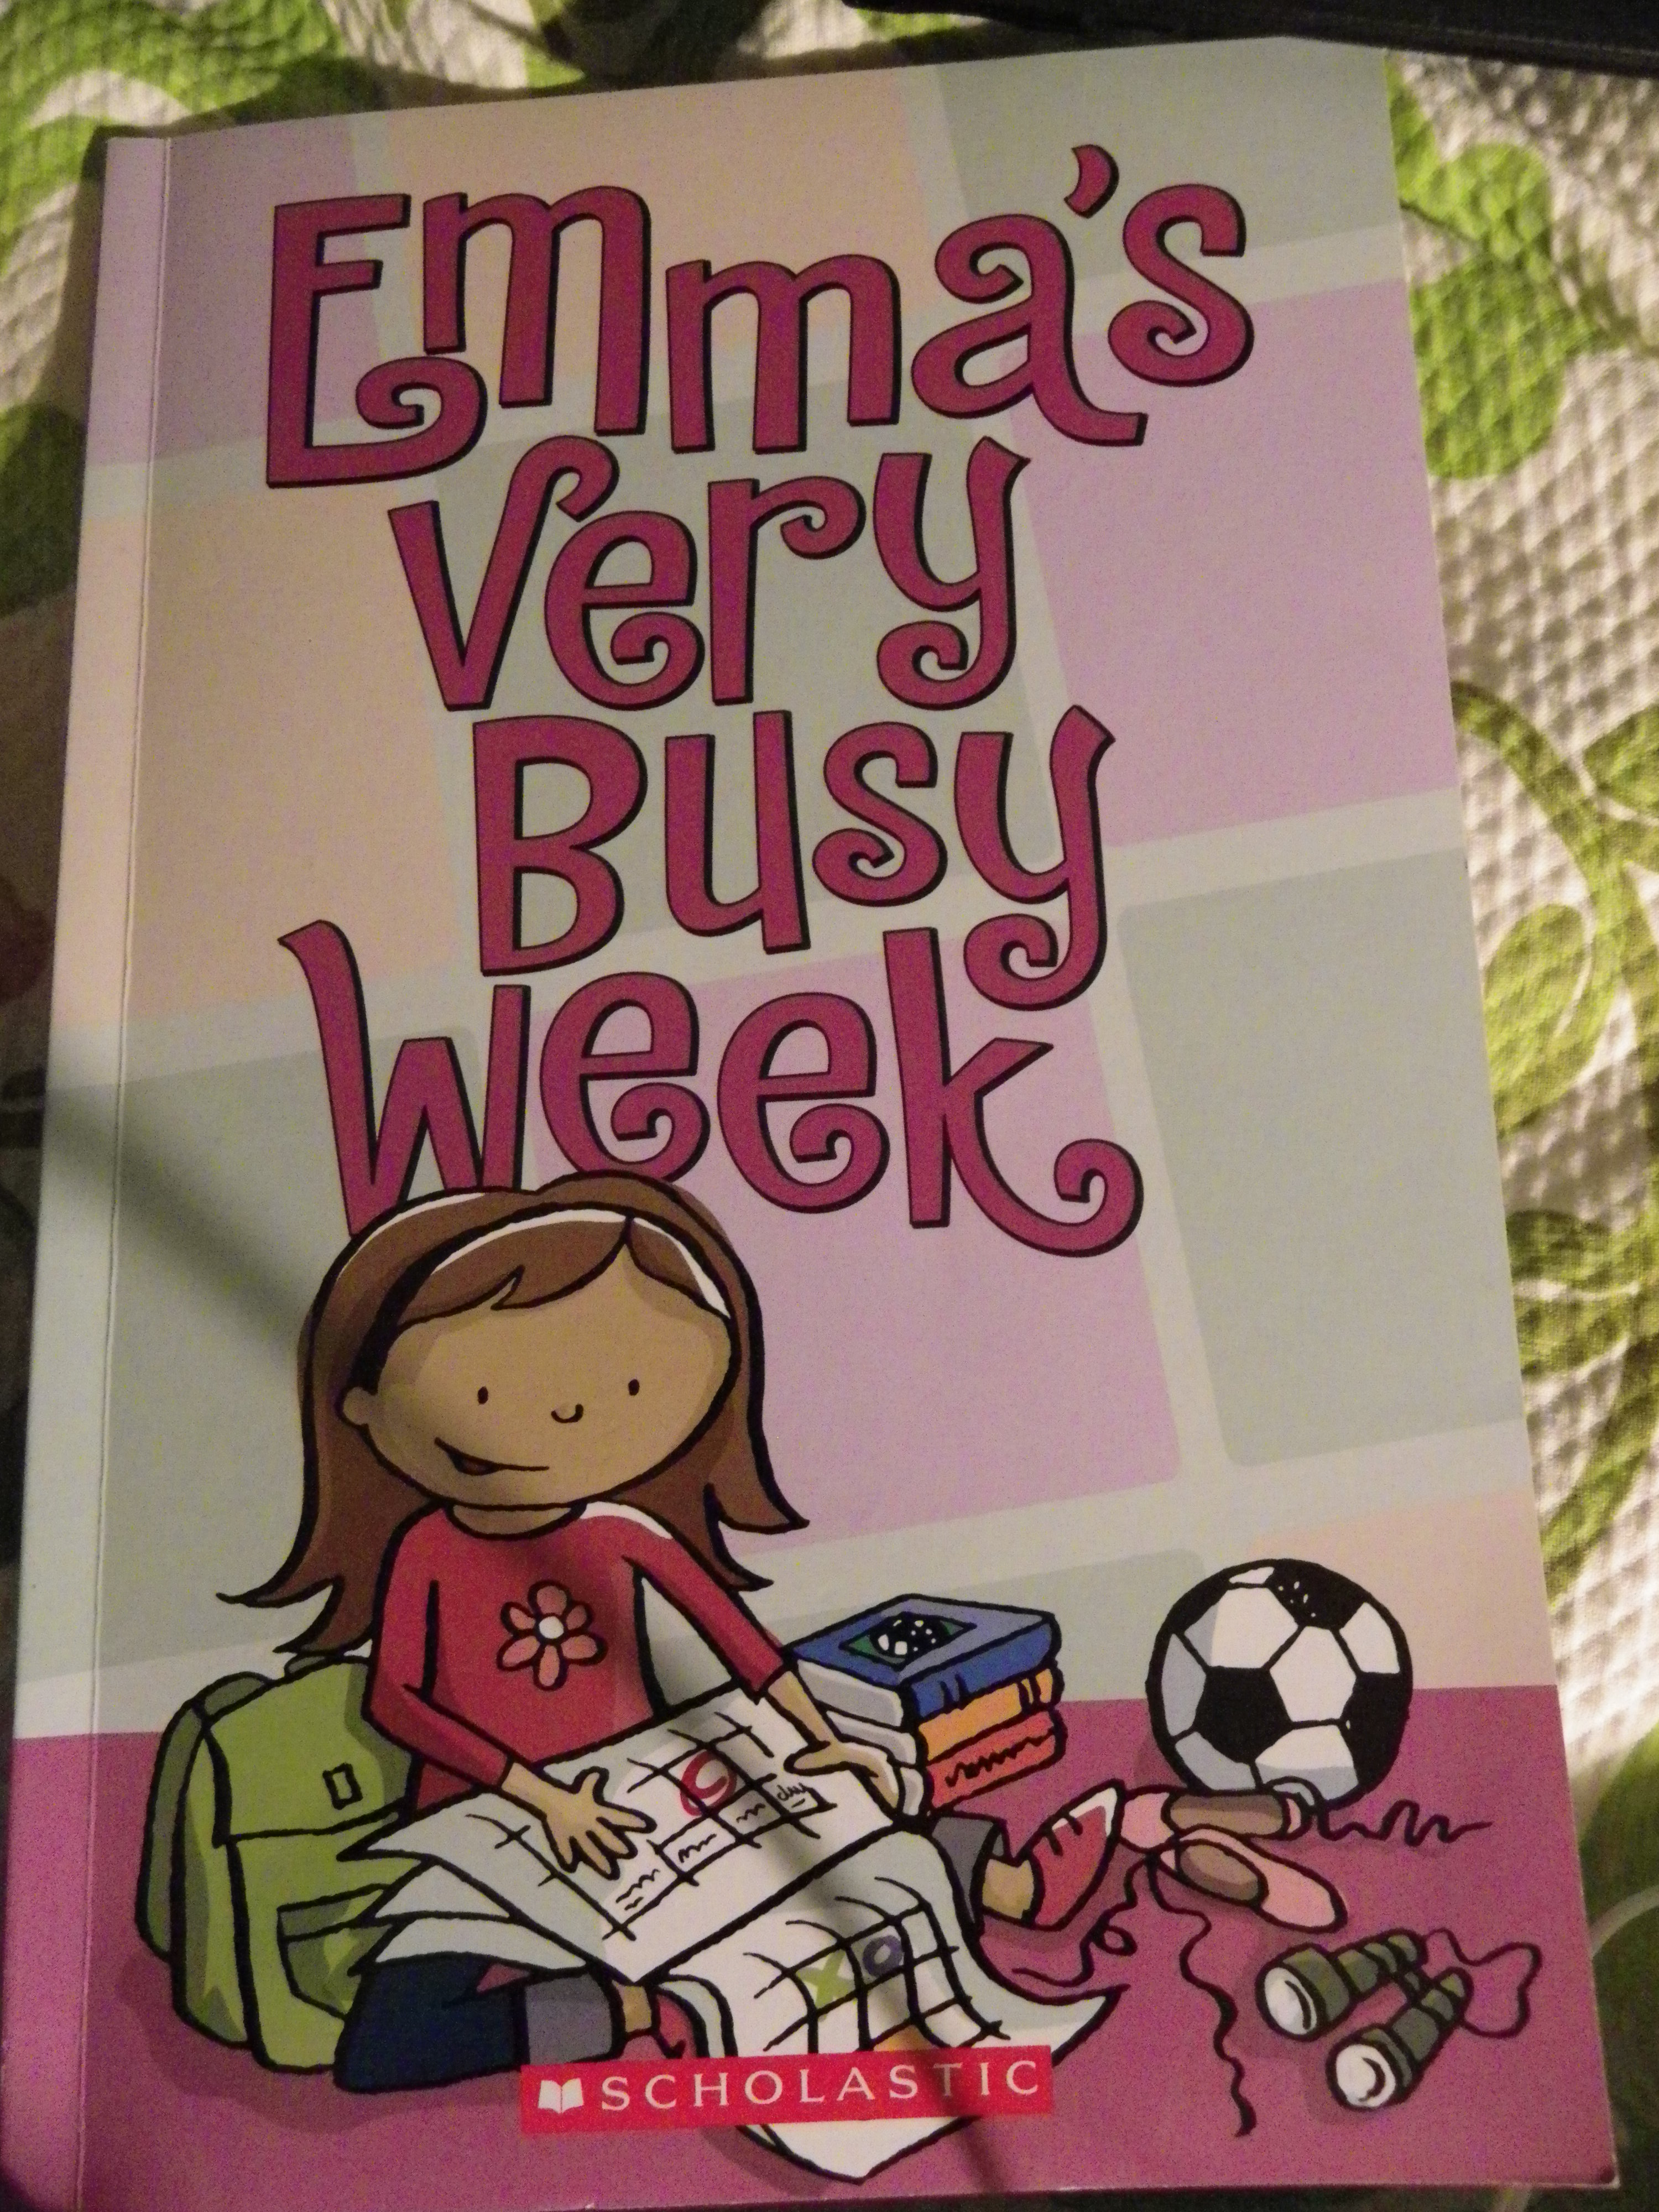 Emma's very busy week